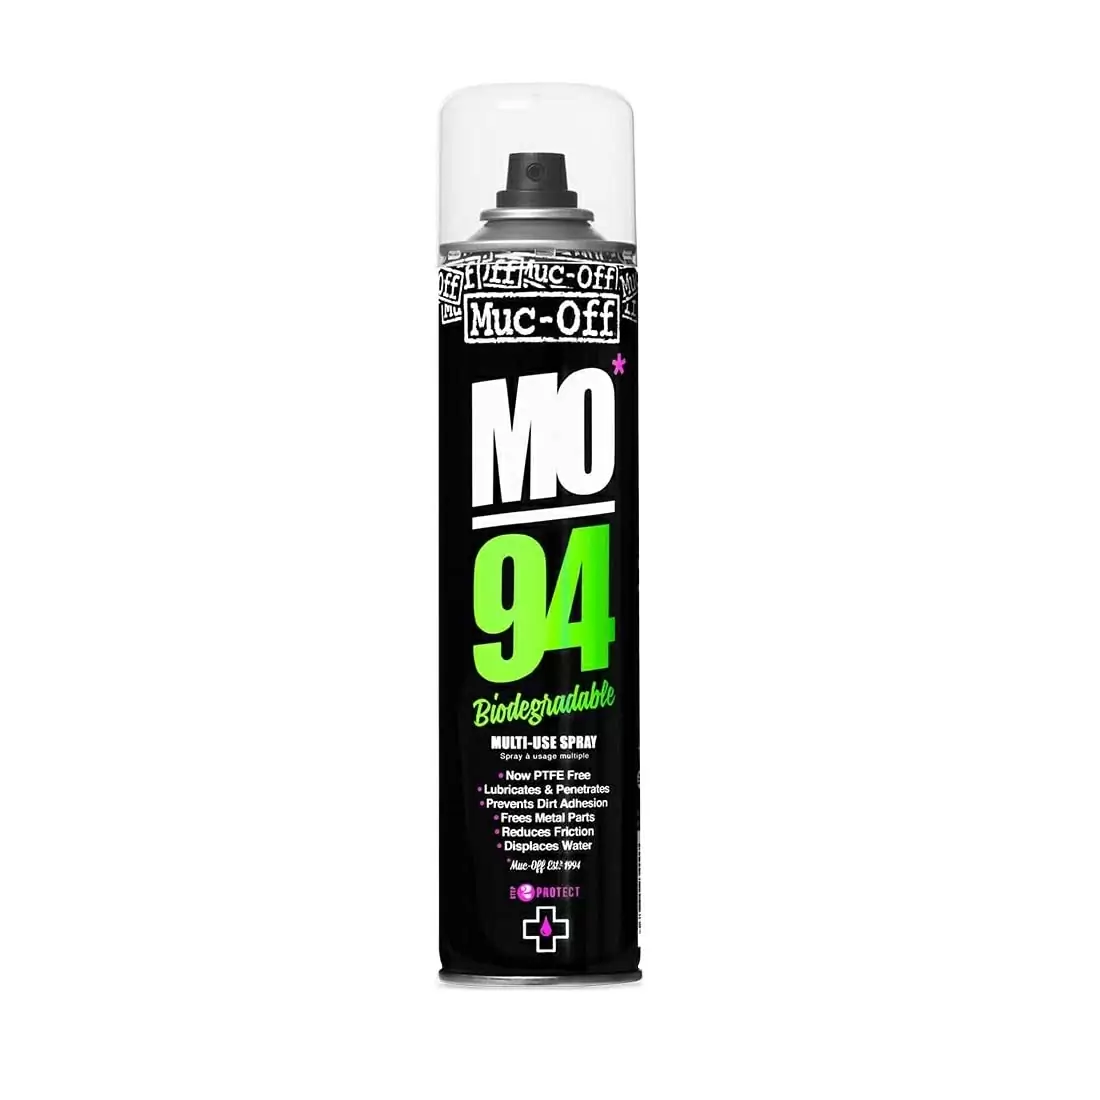 MO94 spray lubricante PTFE Biodegradable tamaño taller 750ml - image